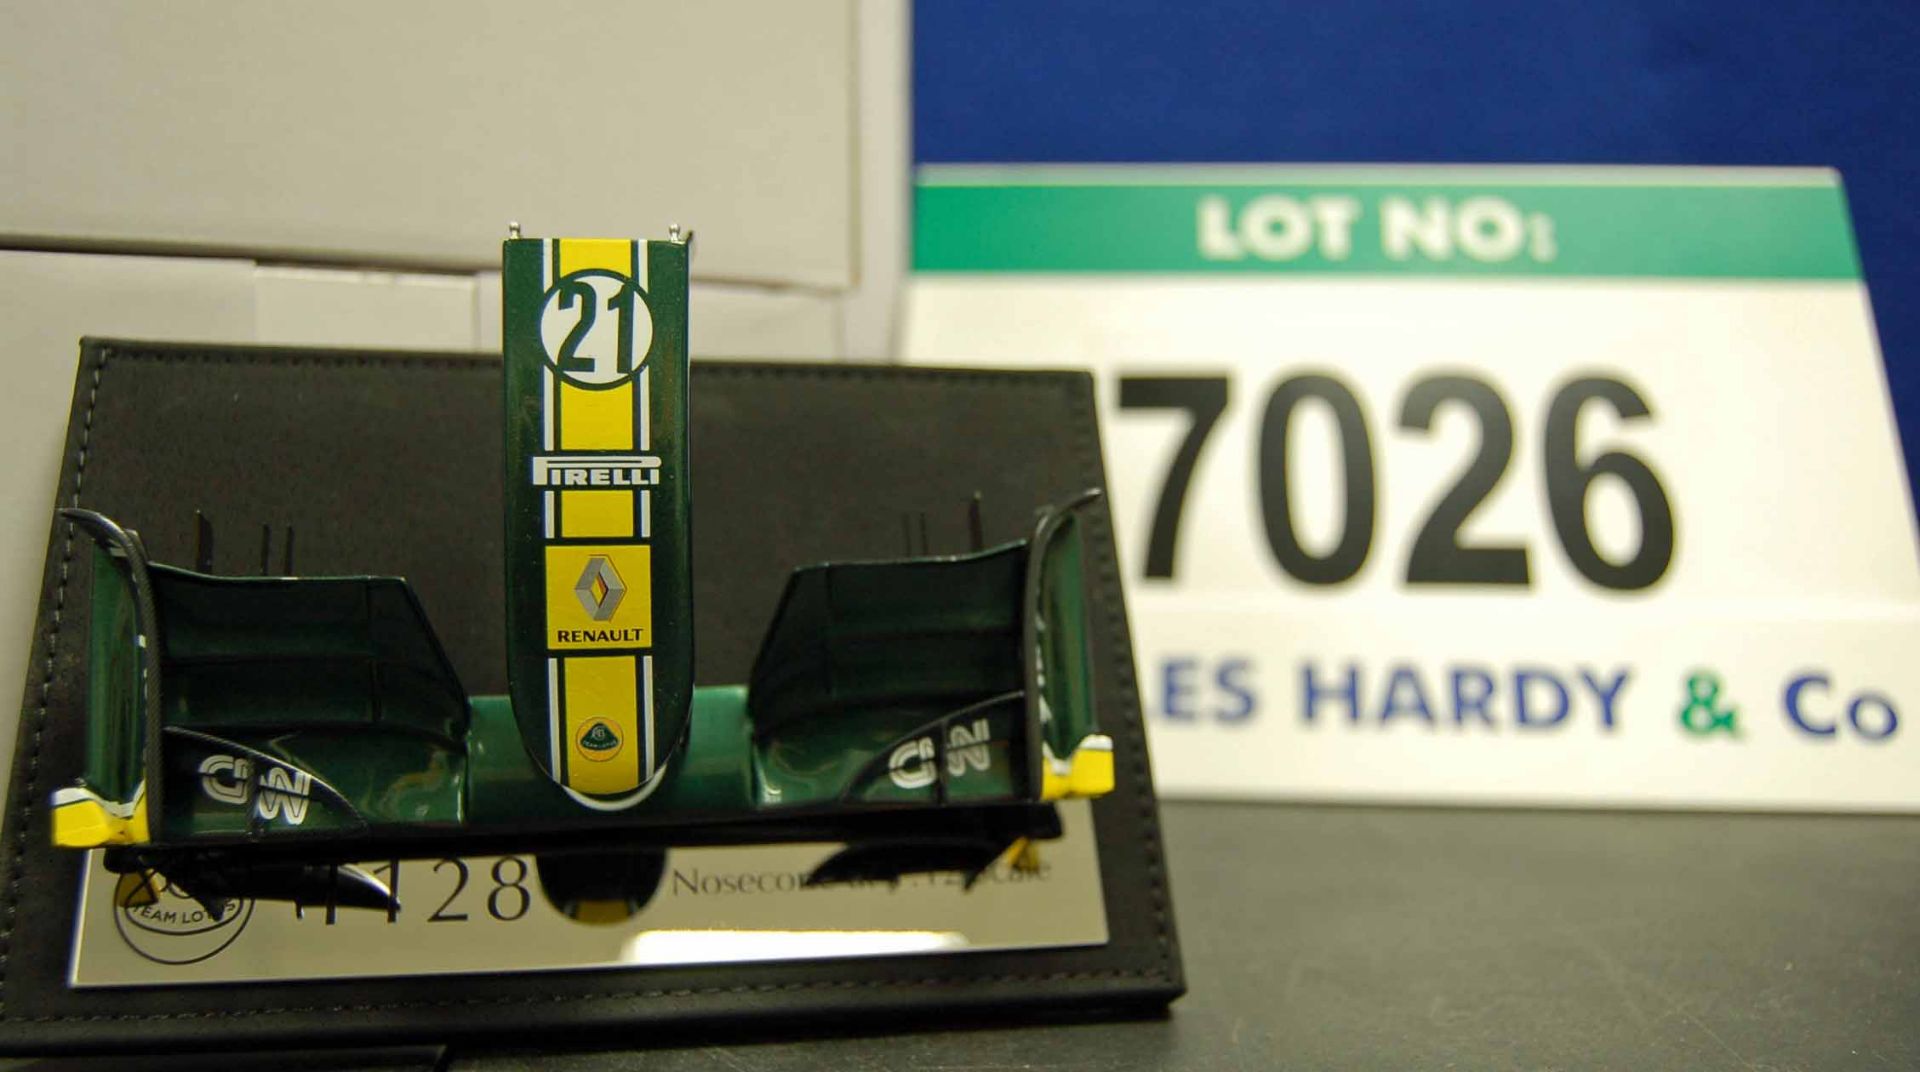 Five Amalgam FINE MODELS Racing Car Models of aTeam LOTUS T128 1/12 Nose Cone, Driver No. 21 -